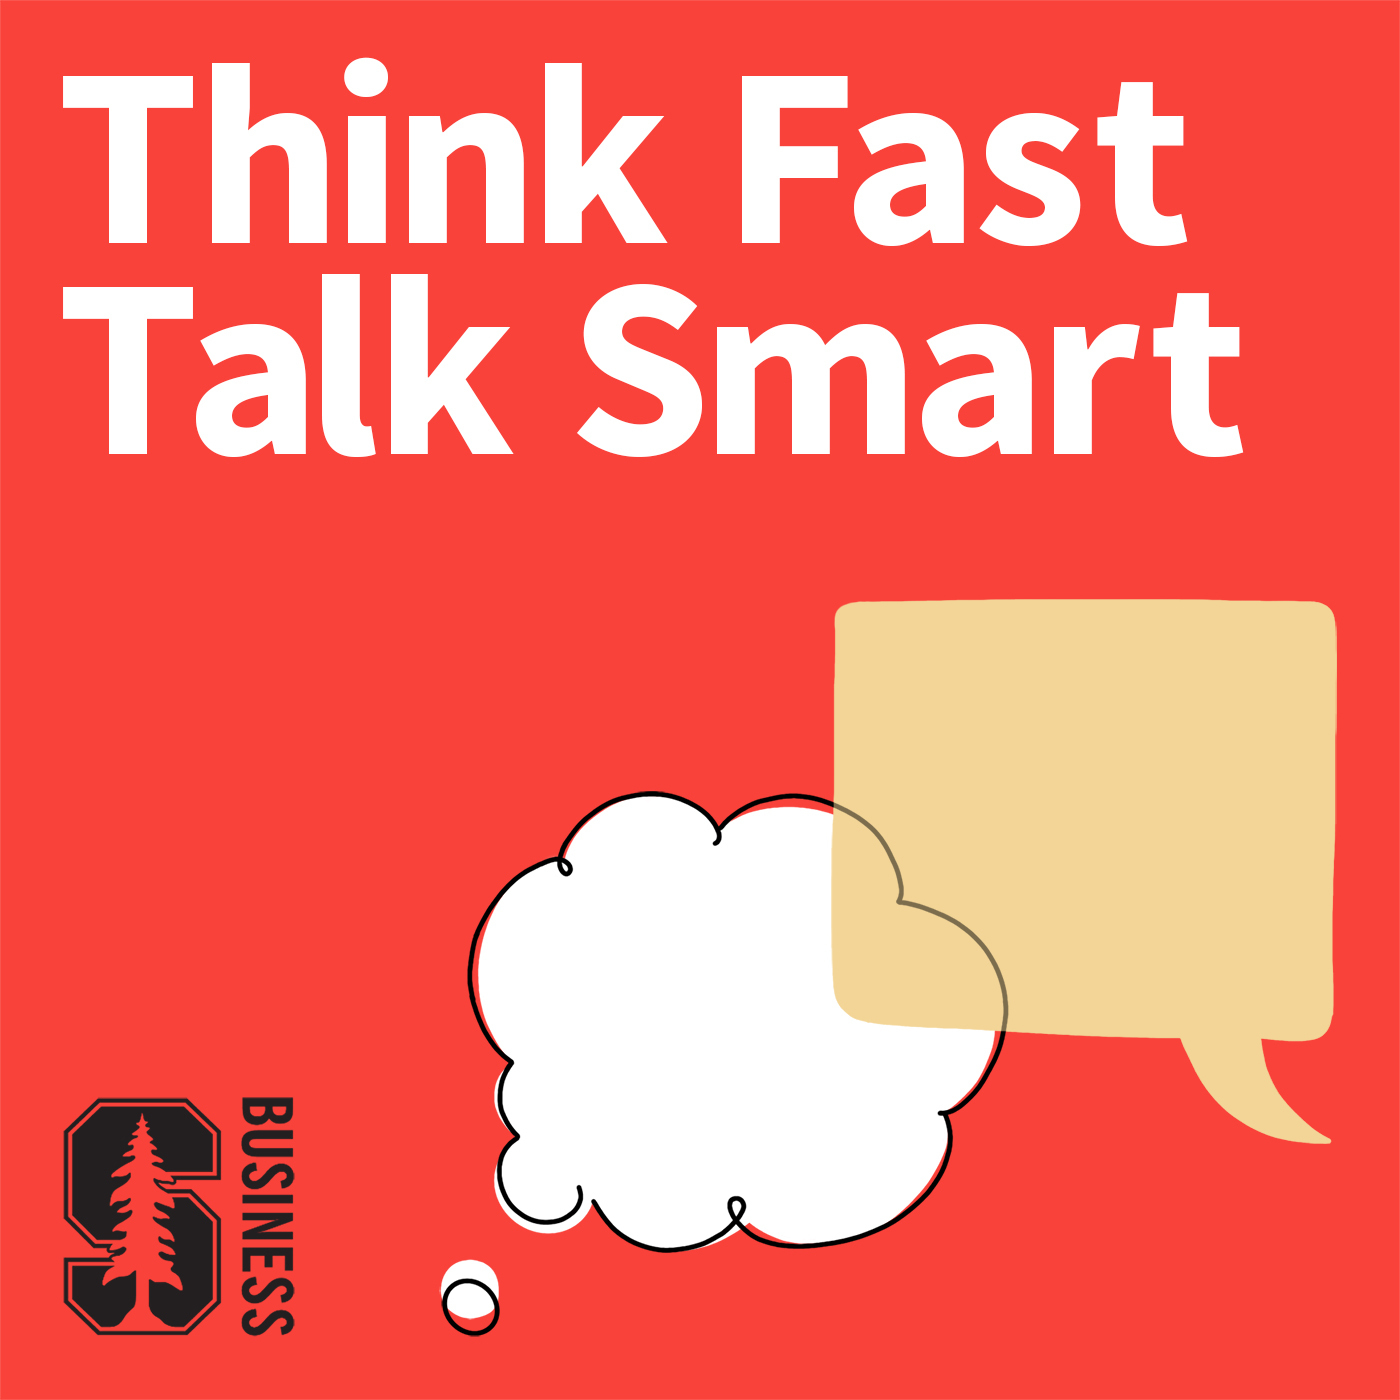 Think Fast, Talk Smart: Communication Techniques podcast show image